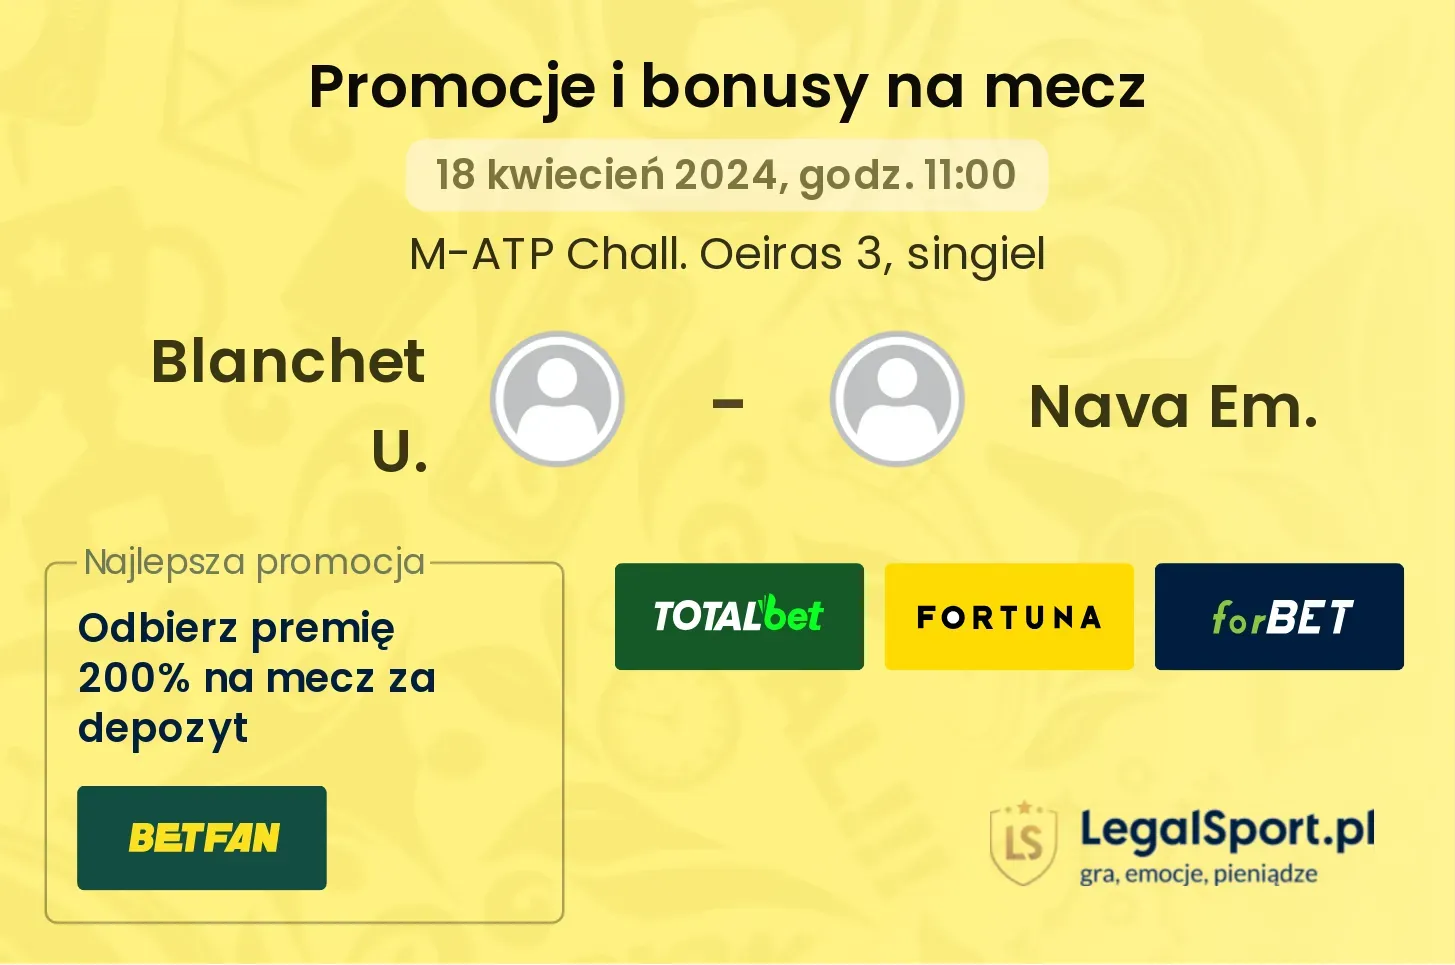 Blanchet U. - Nava Em. promocje bonusy na mecz